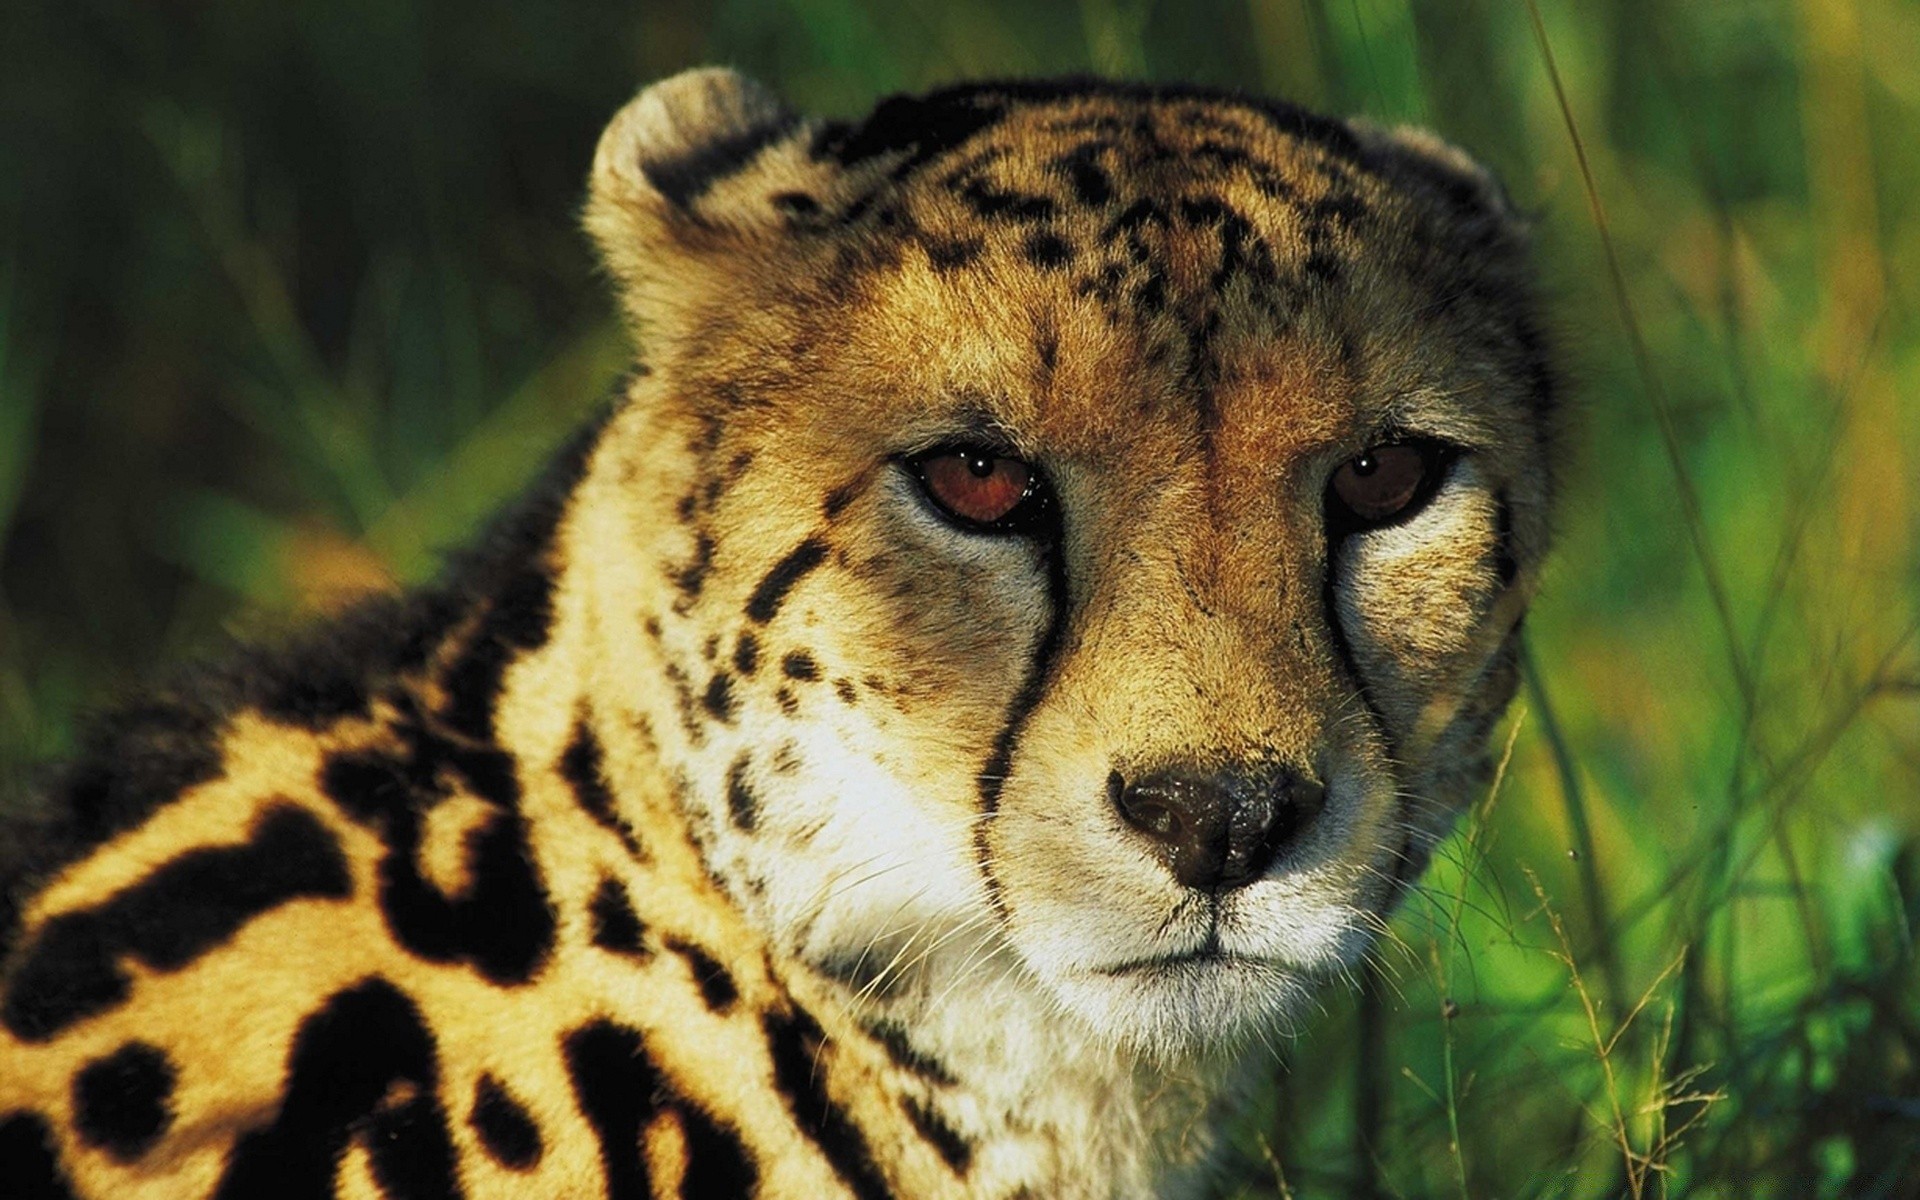 animals wildlife mammal cat predator animal carnivore wild zoo fur nature portrait safari hunter cheetah big eye